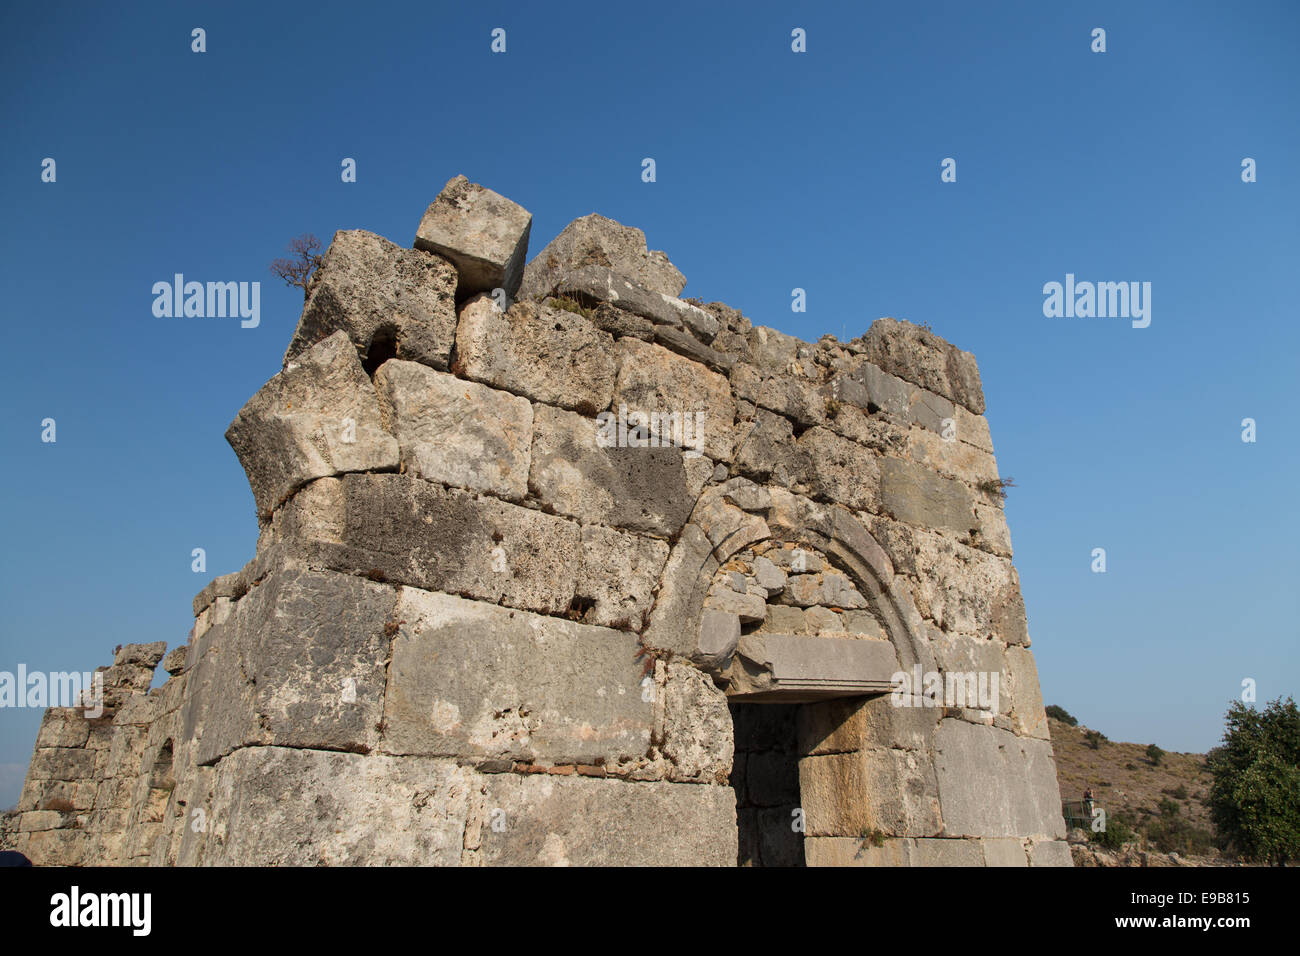 Kaunos ancient city Dalyan Town Turkey Stock Photo